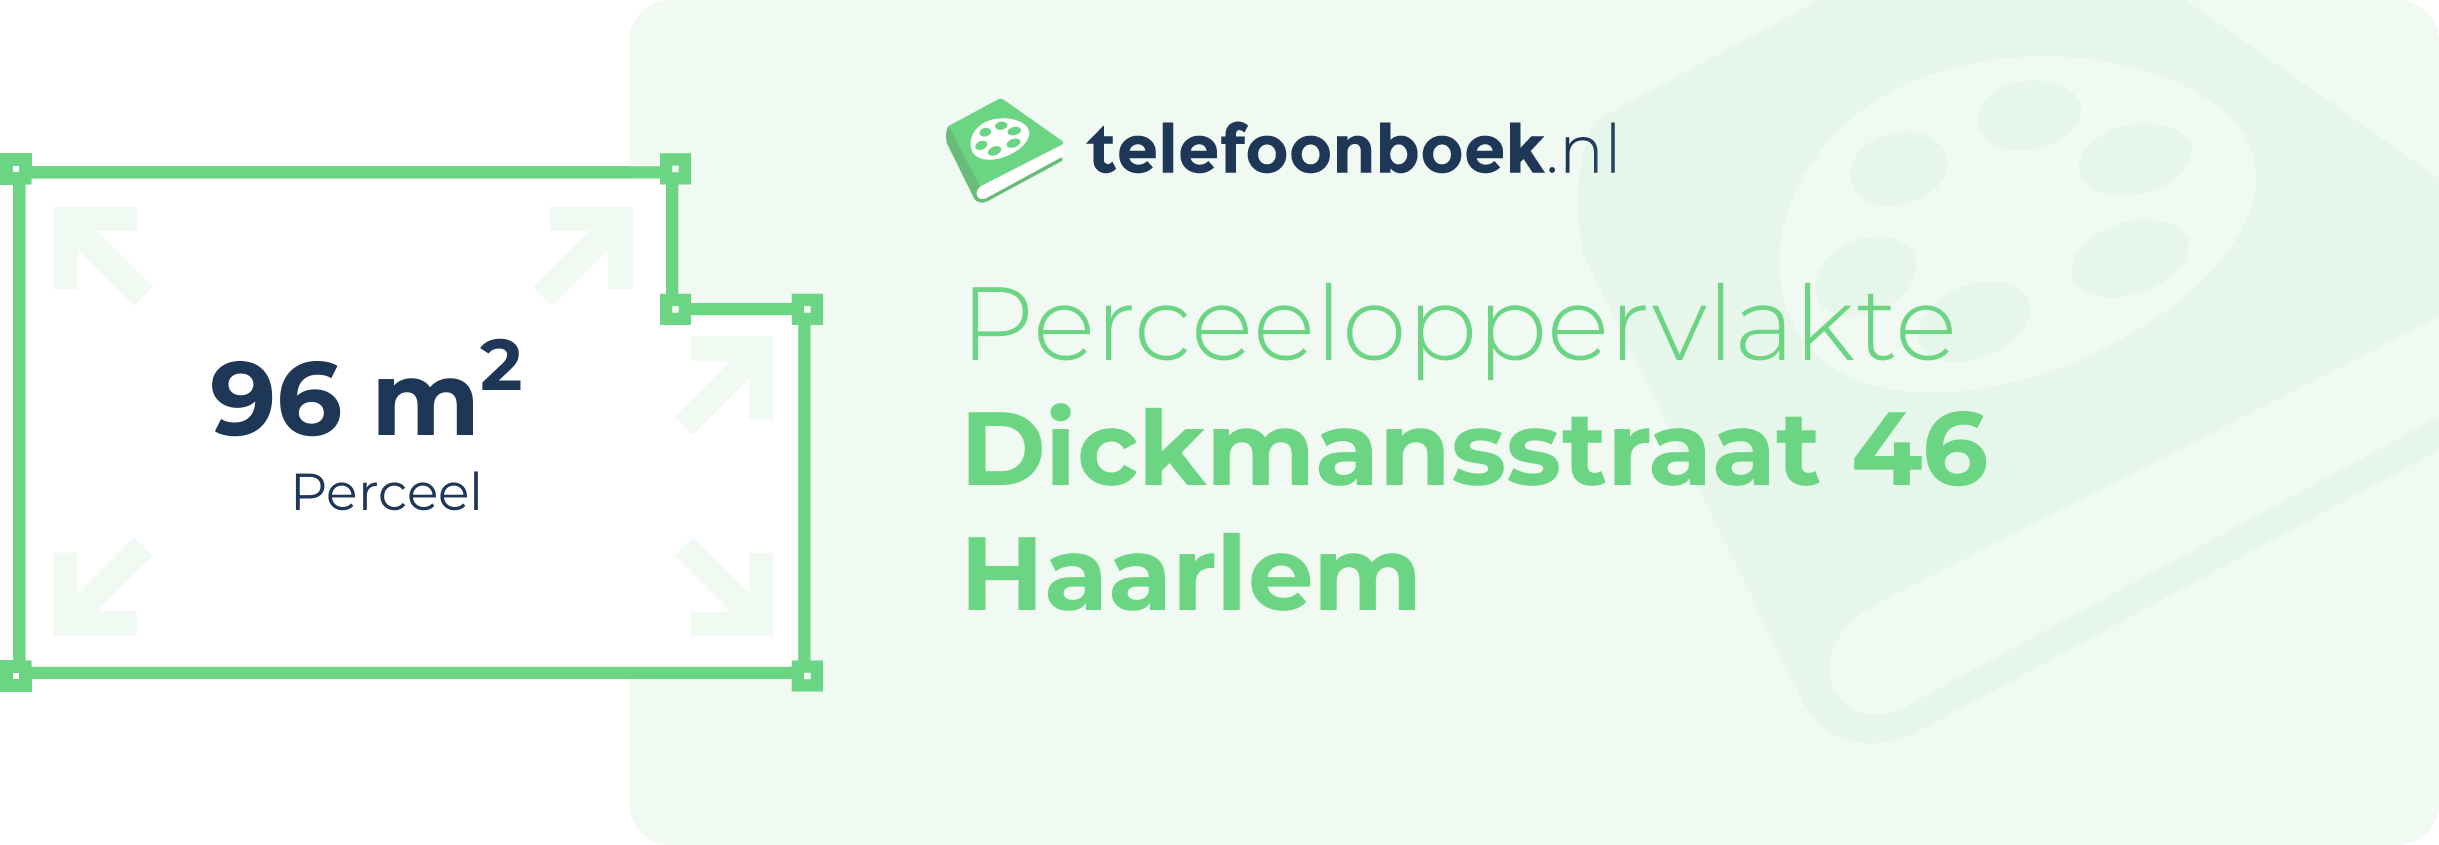 Perceeloppervlakte Dickmansstraat 46 Haarlem